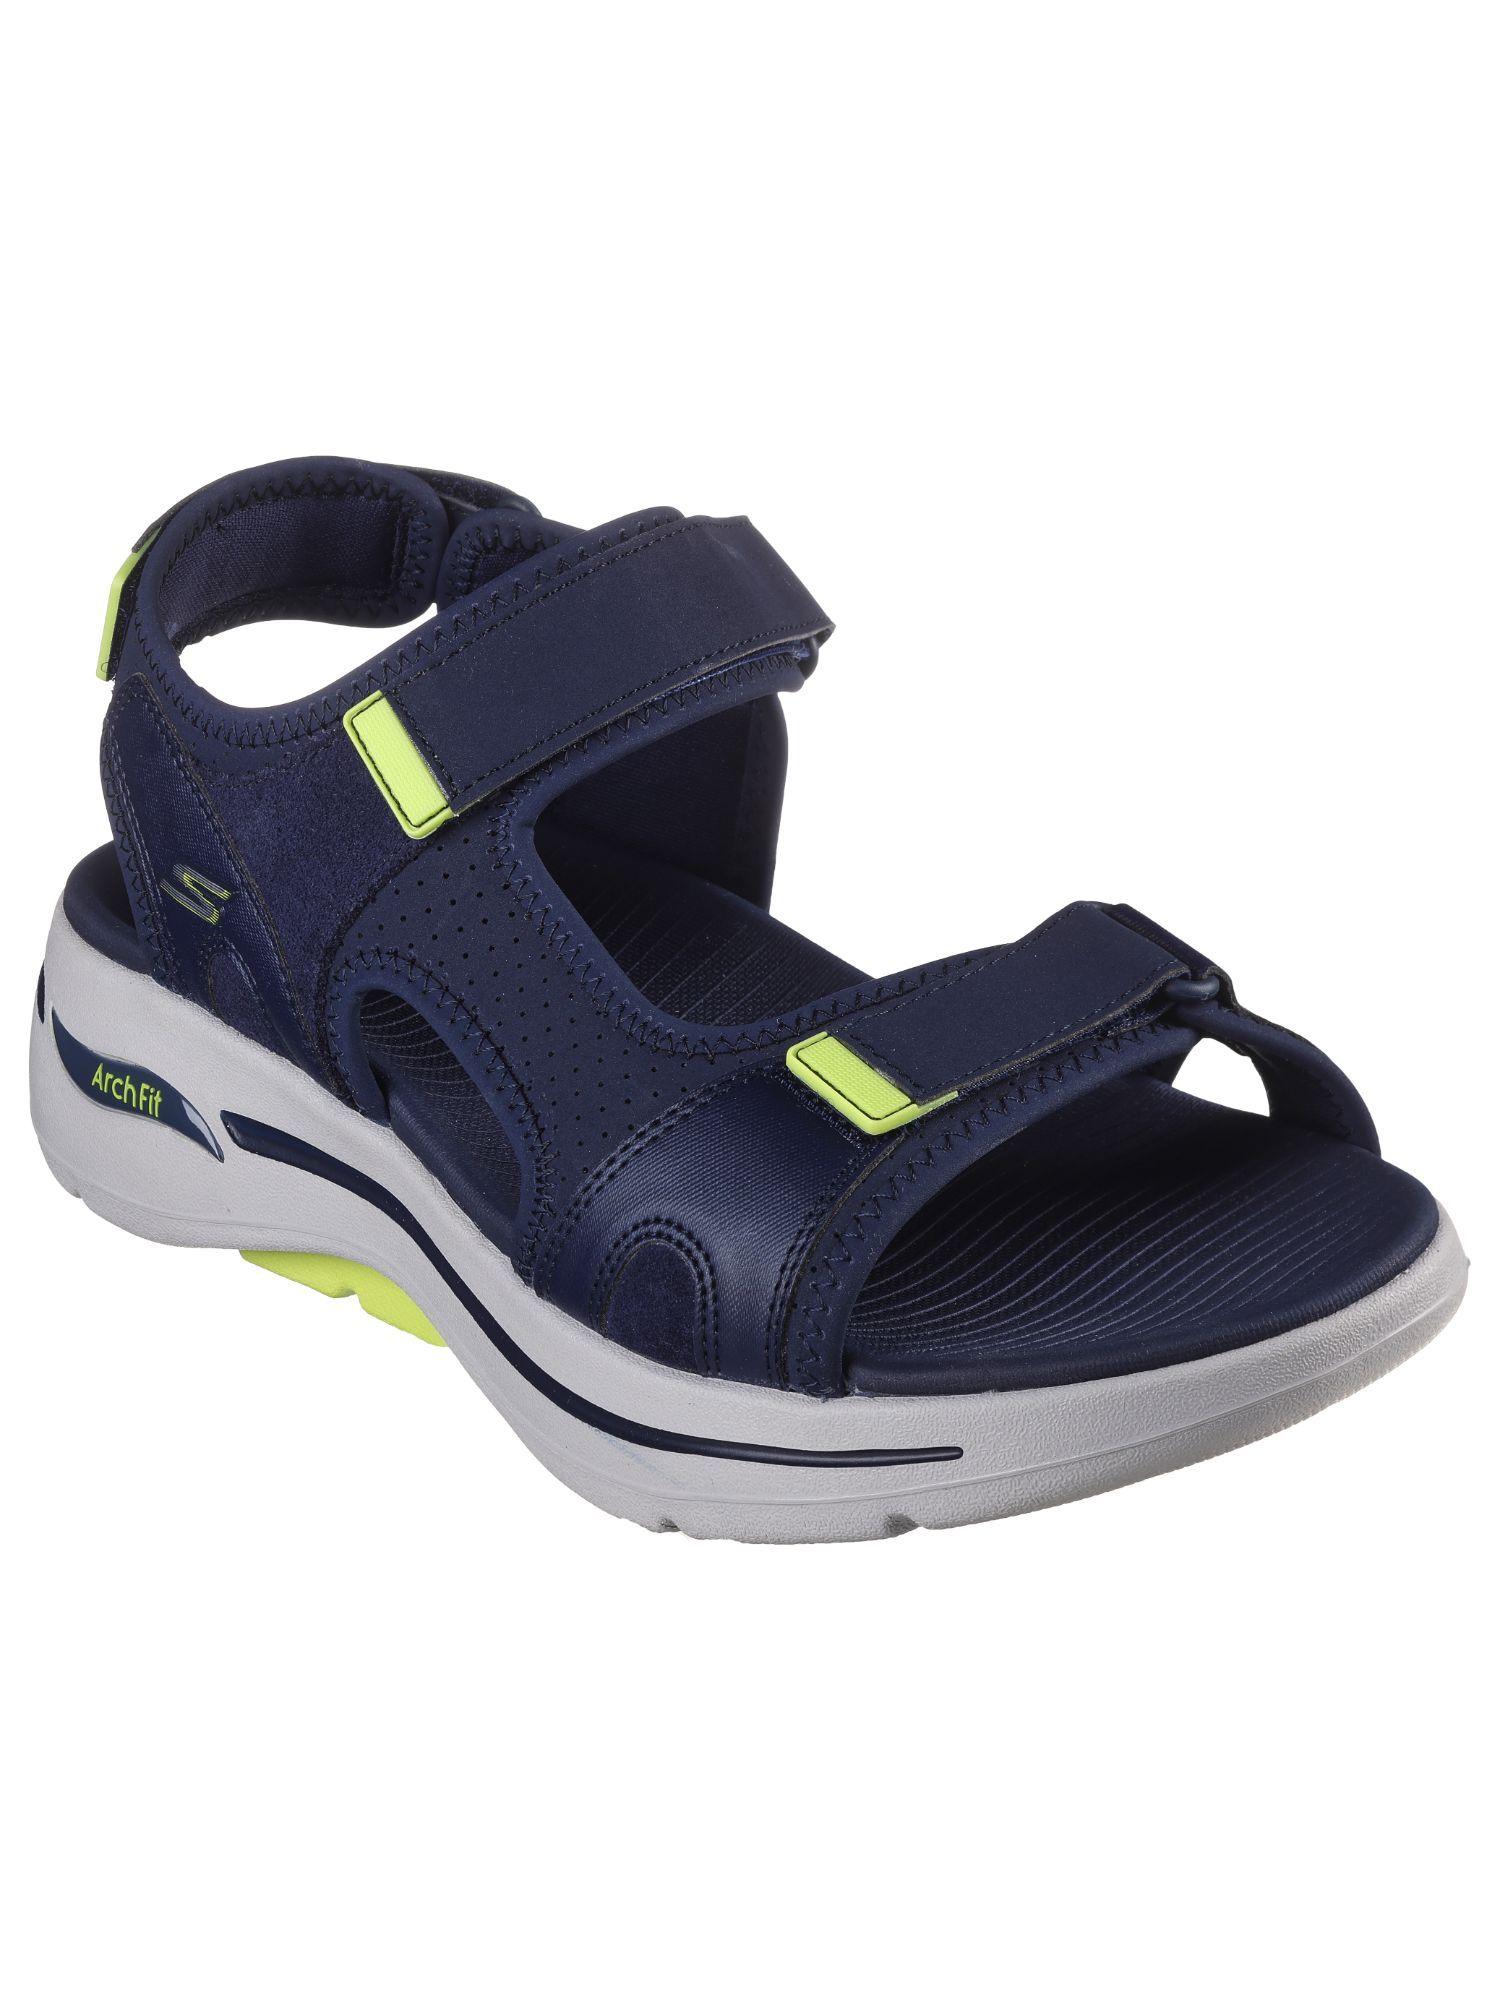 go-walk-arch-fit-sandal-missi-navy-blue-sandals